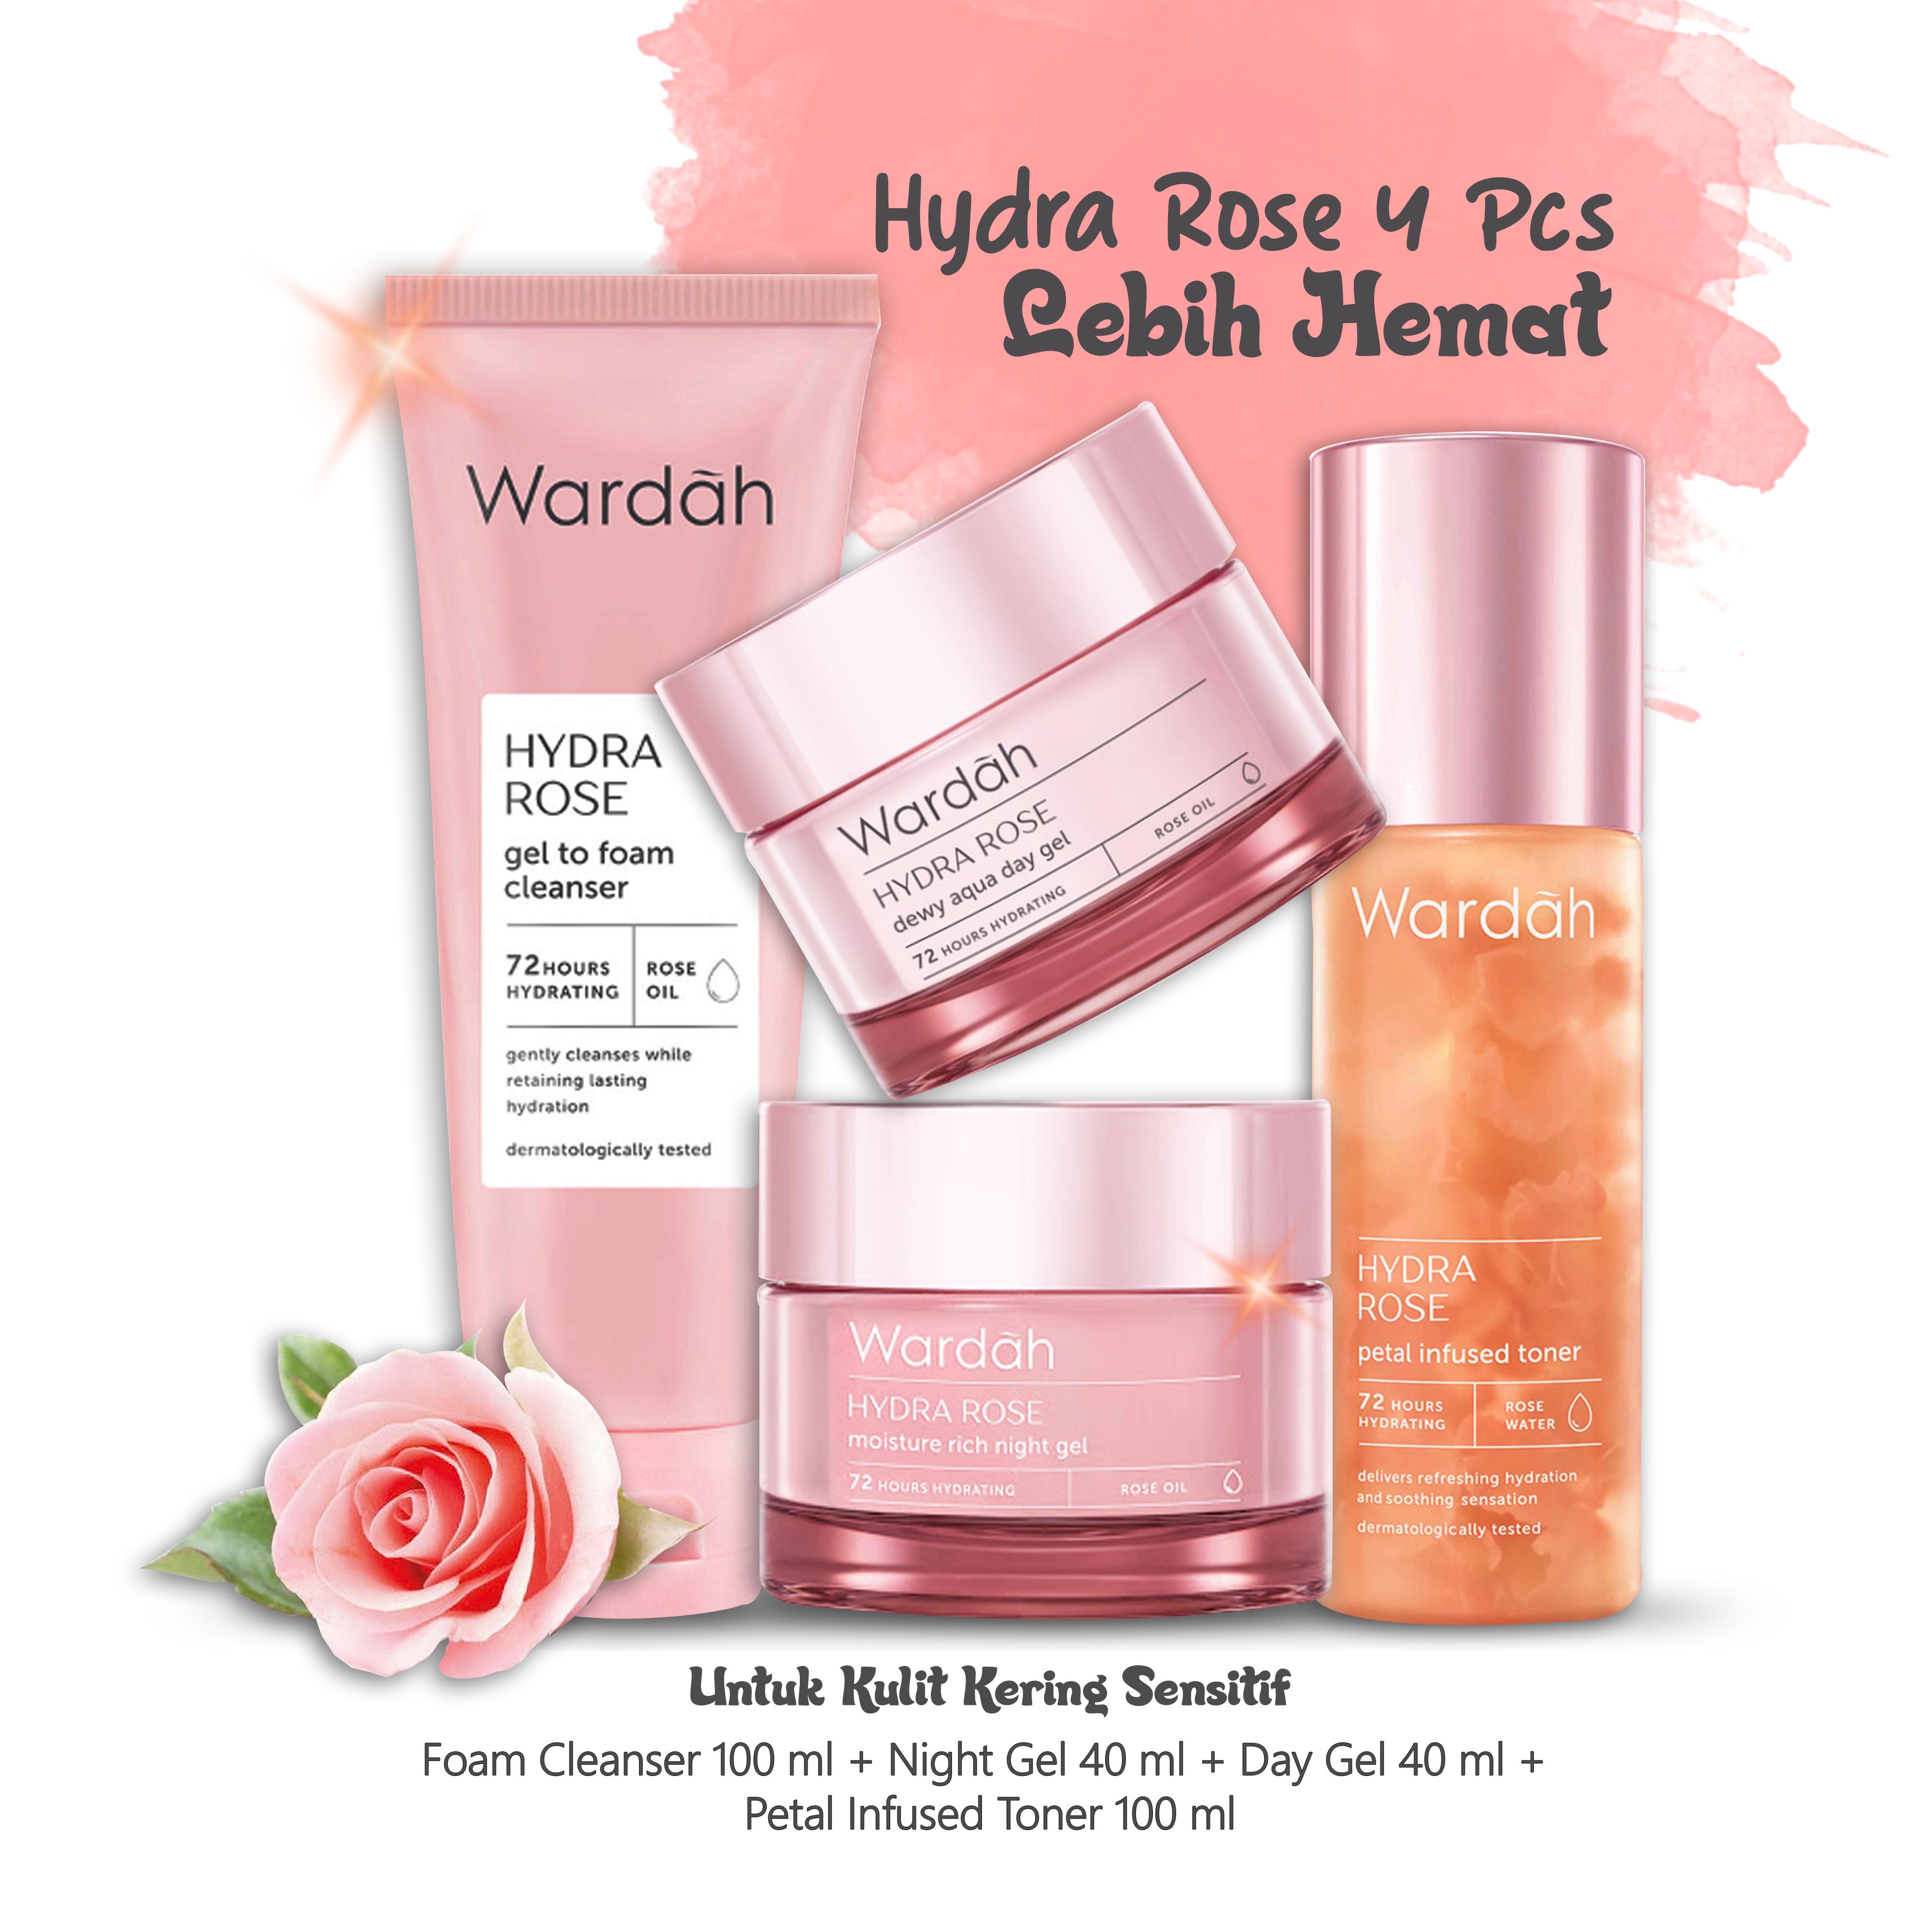 Paket Istimewa Wardah Hydra Rose 4 pcs (Foam Cleanser 100 ml + Petal Infused Toner 100 ml + Night Gel 17 ml + Day Gel 17 ml) Kemasan Besar